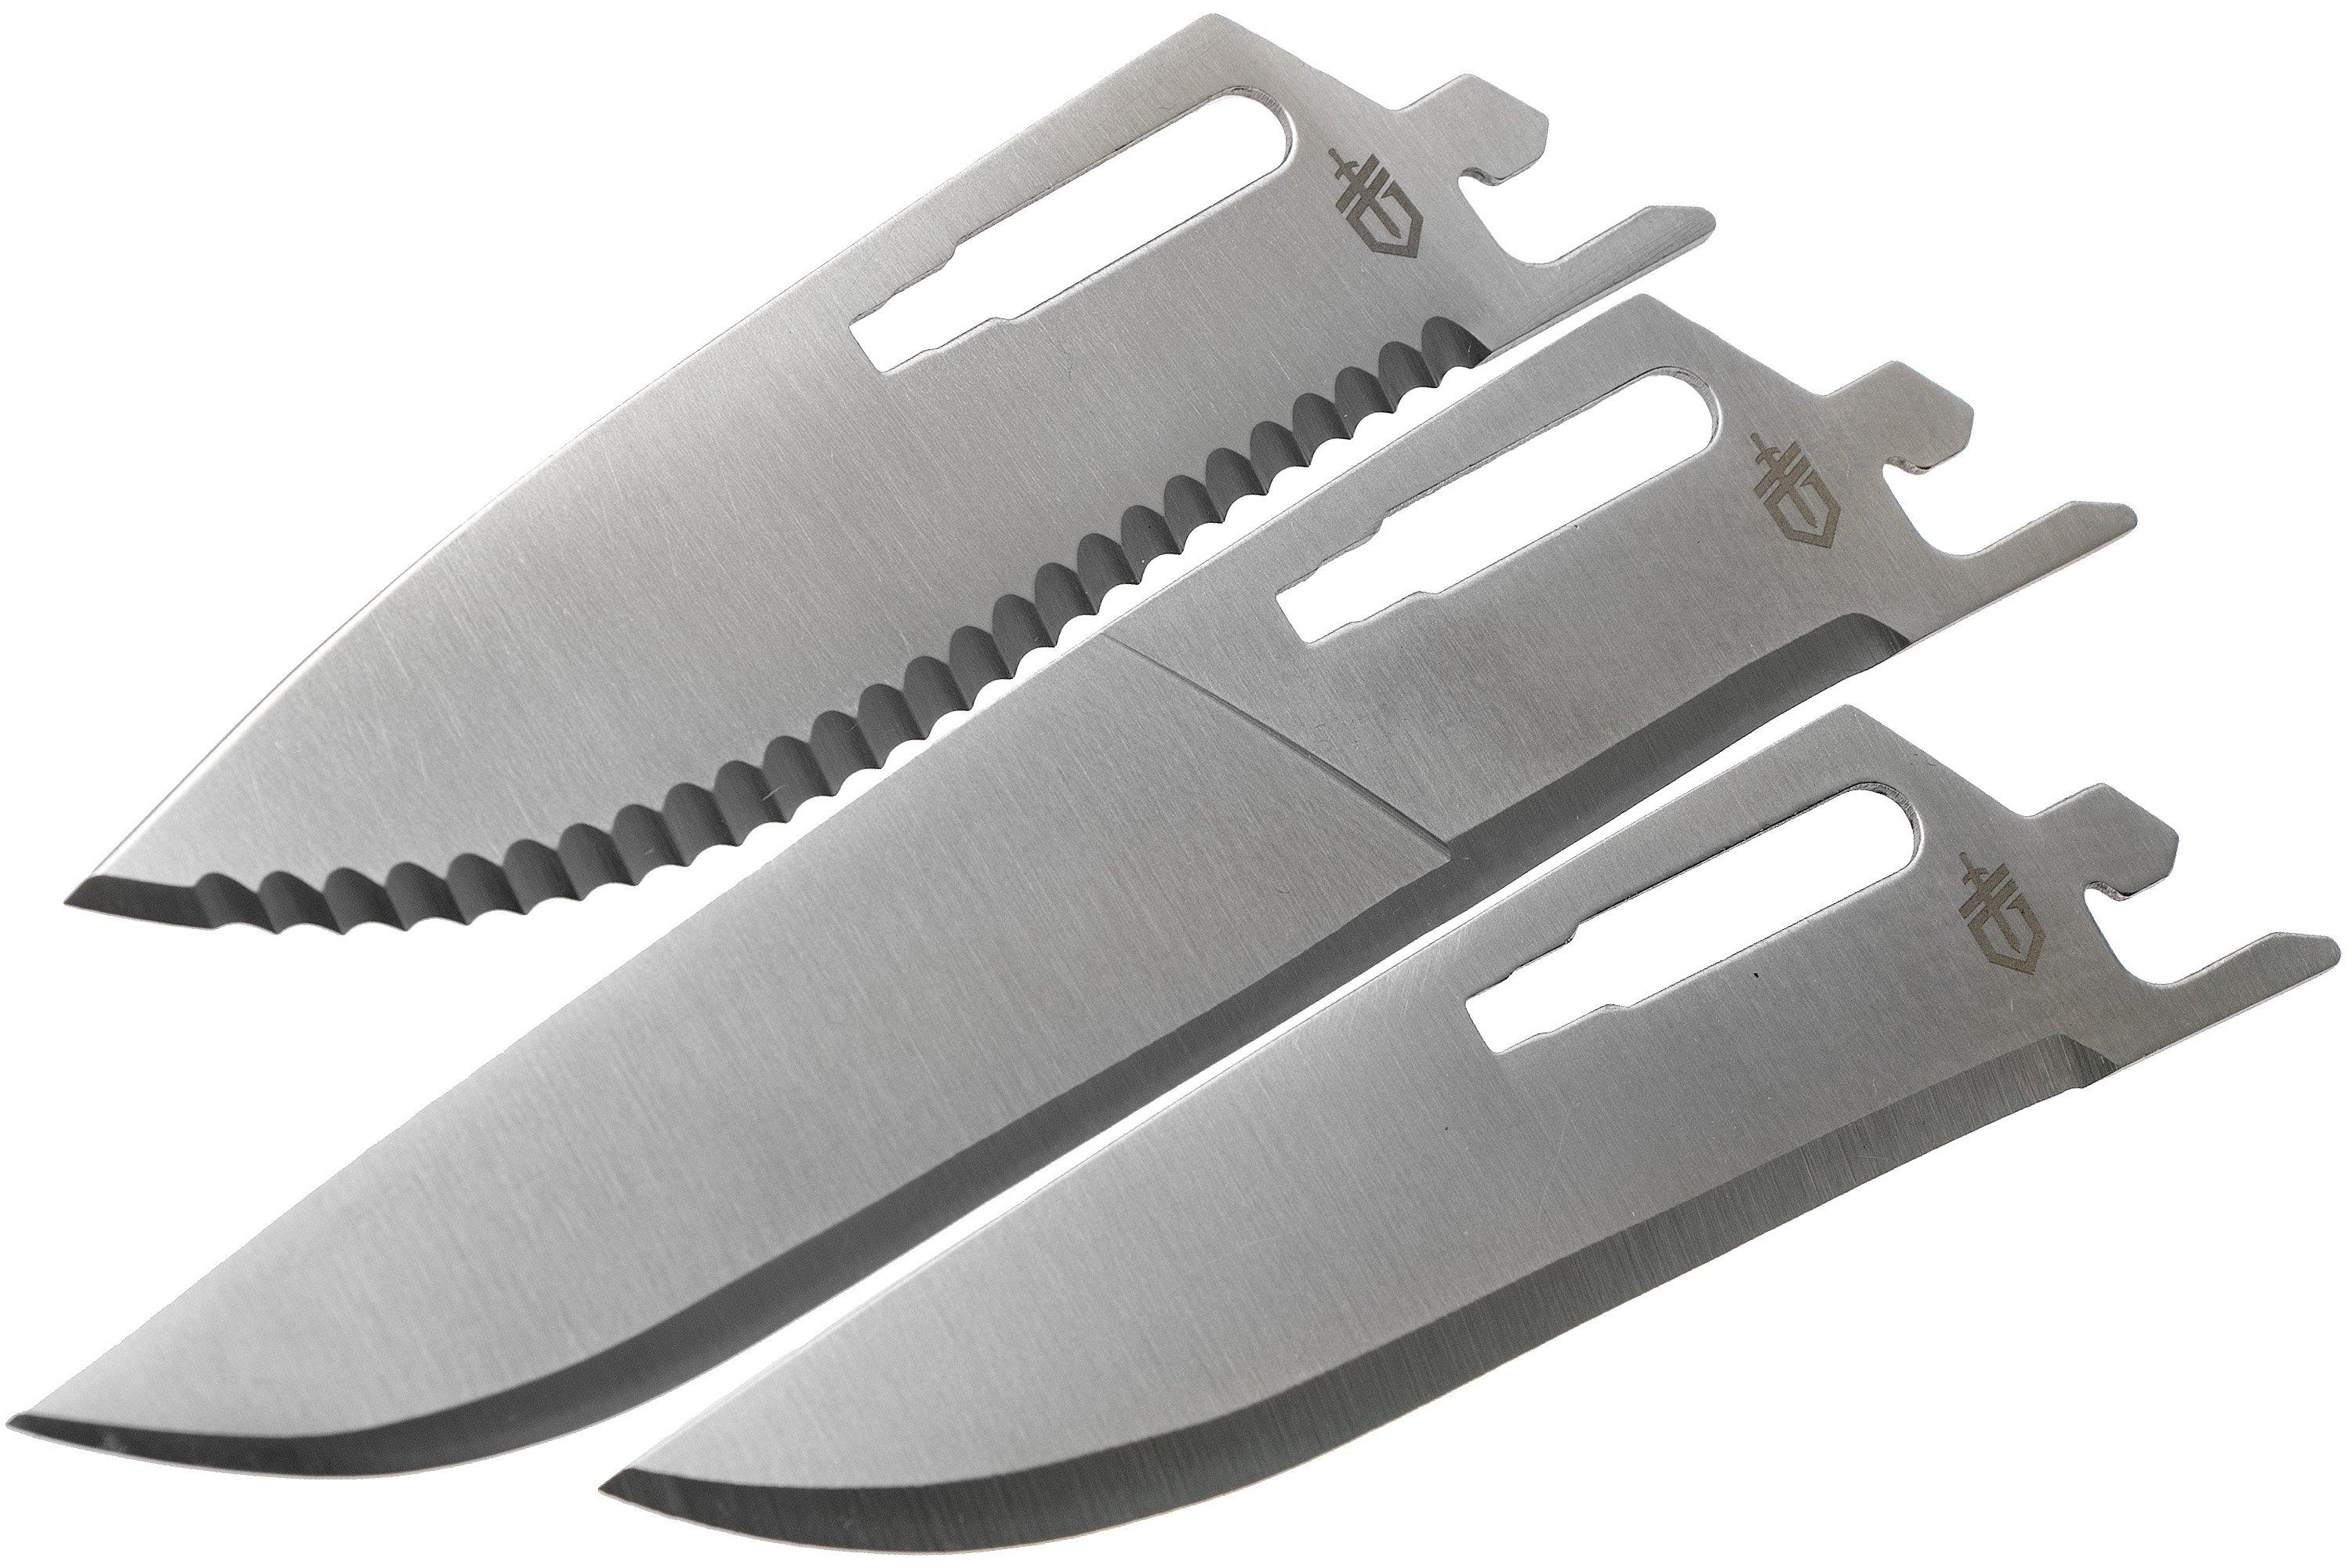 Gerber Randy Newberg EBS 30-001767 hunting knife with three blades ...